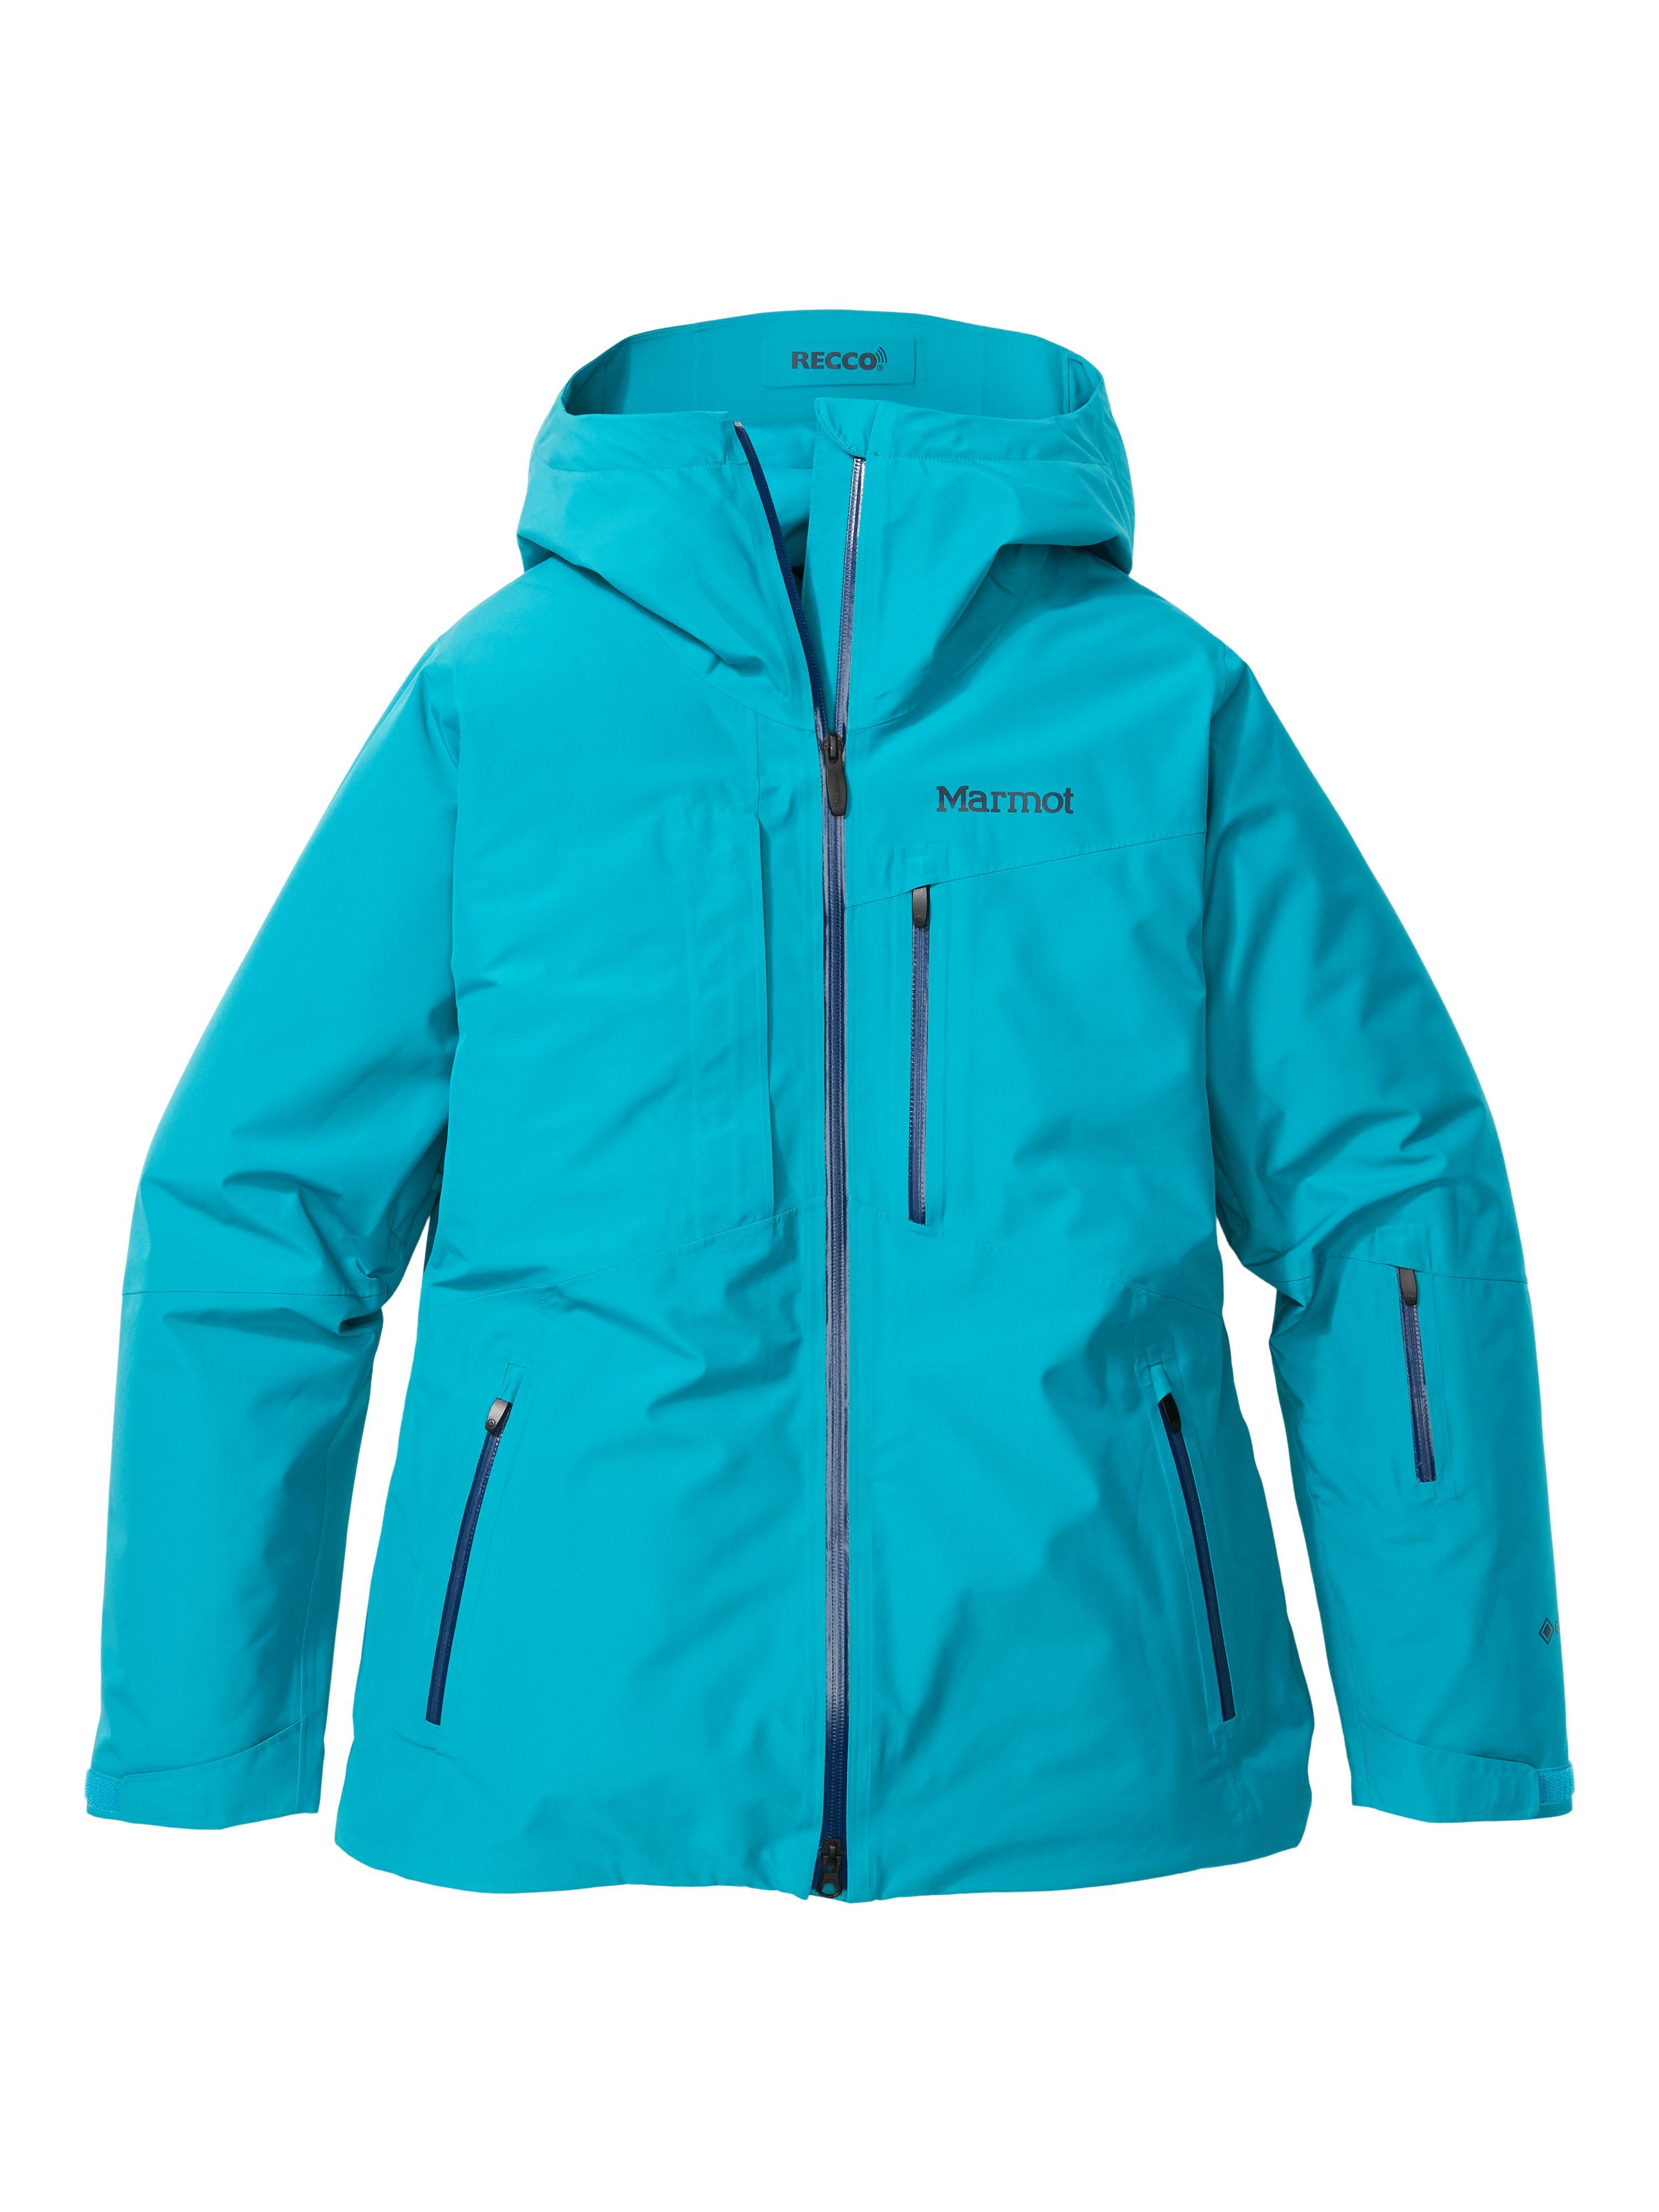 Marmot Lightray Jacket - Ski jacket - Women's